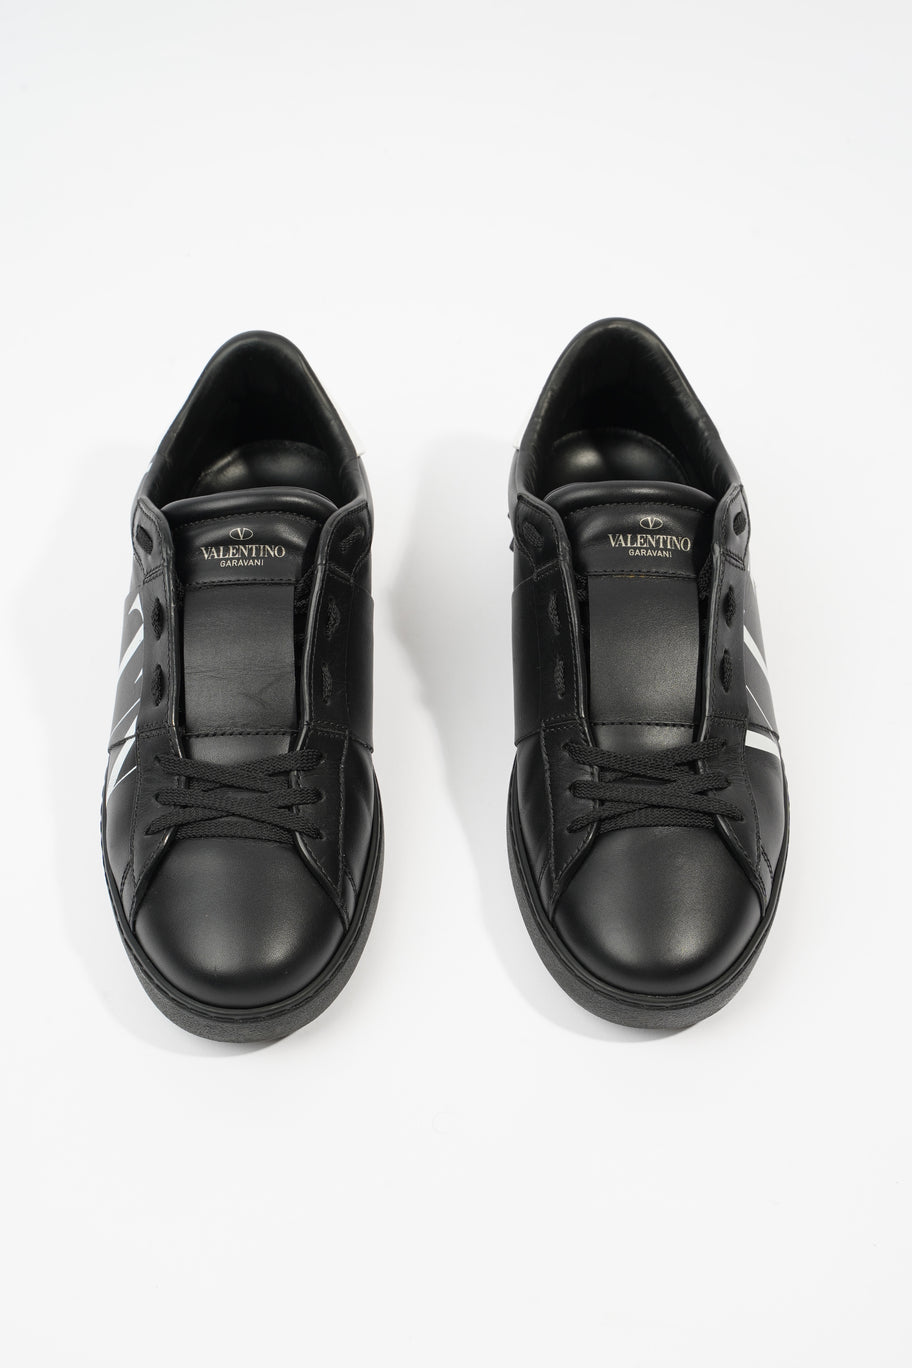 Open VLTN Sneaker Black / White Tab Leather EU 40 UK 6 Image 8